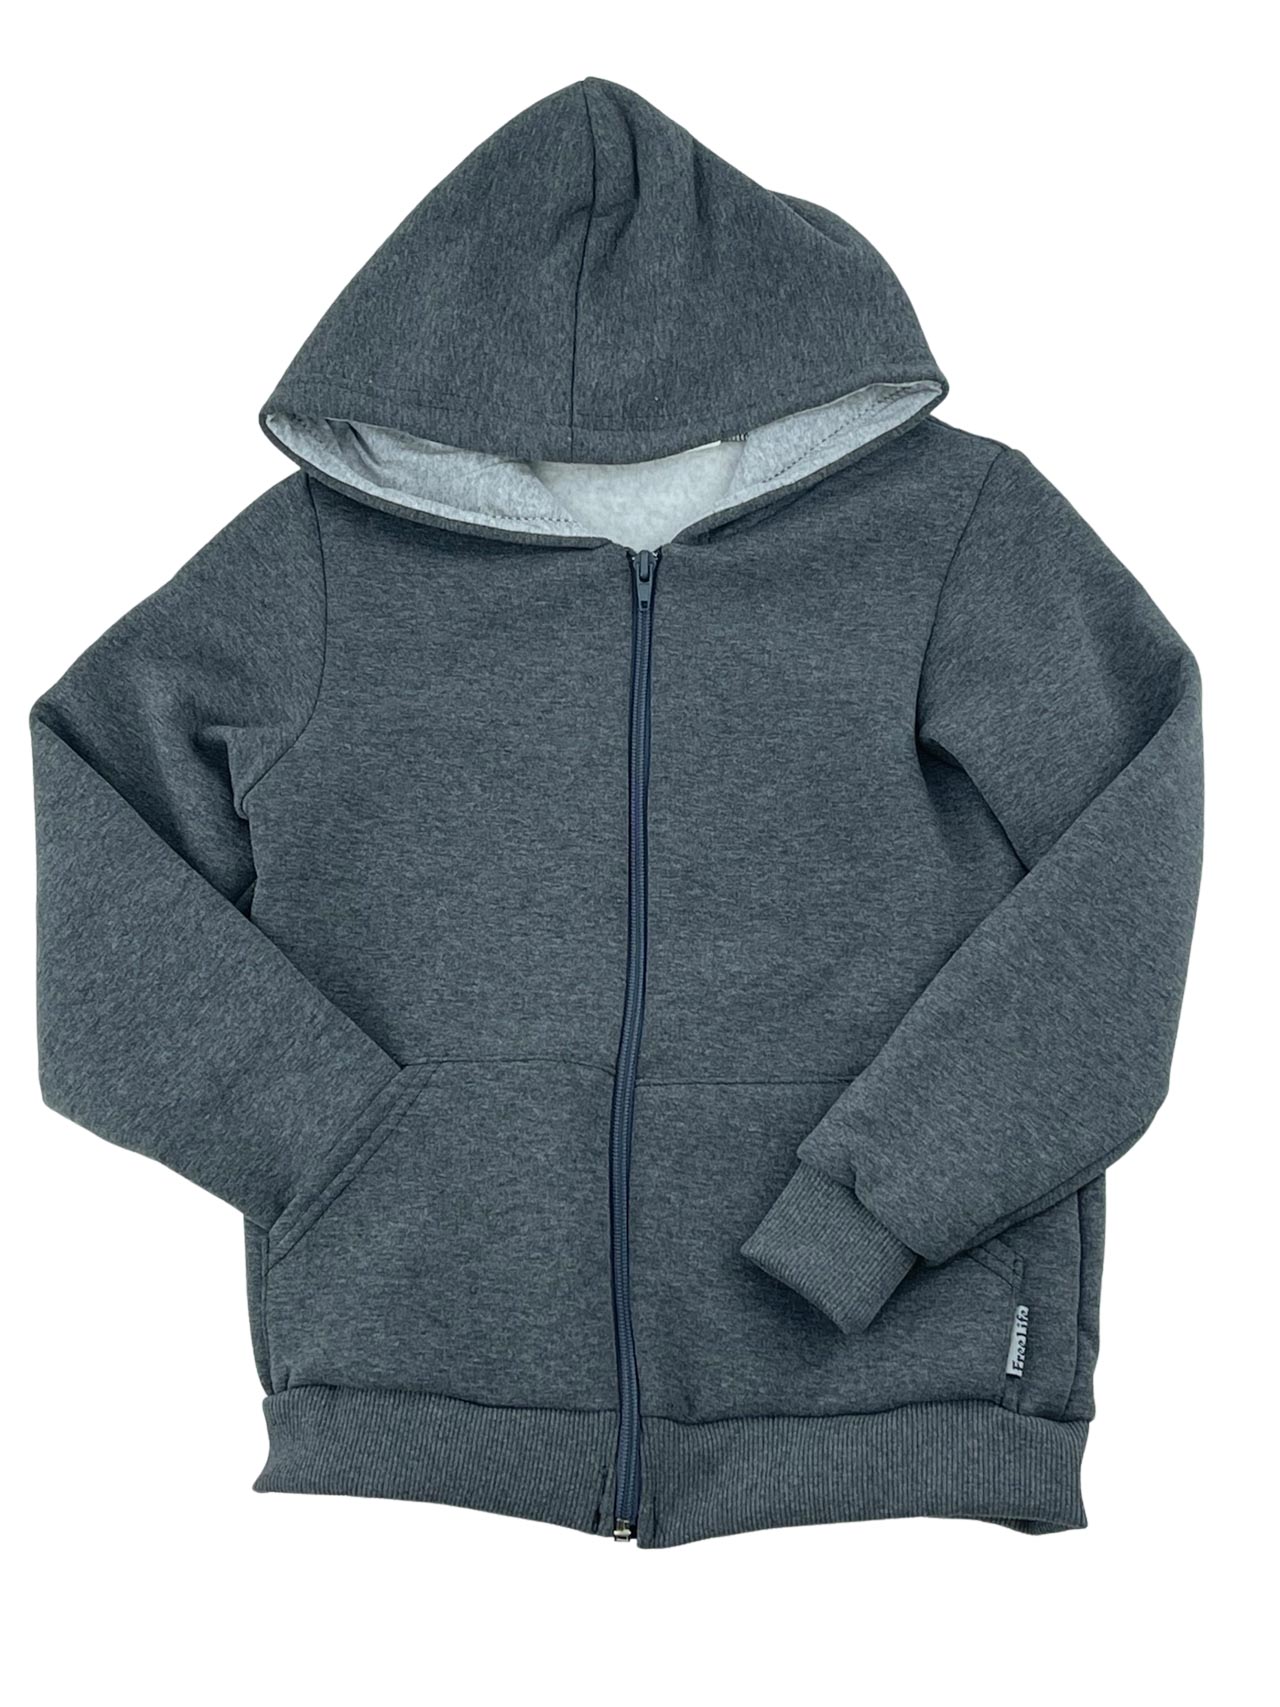 Cardigan girl hoodie monochrome code 203